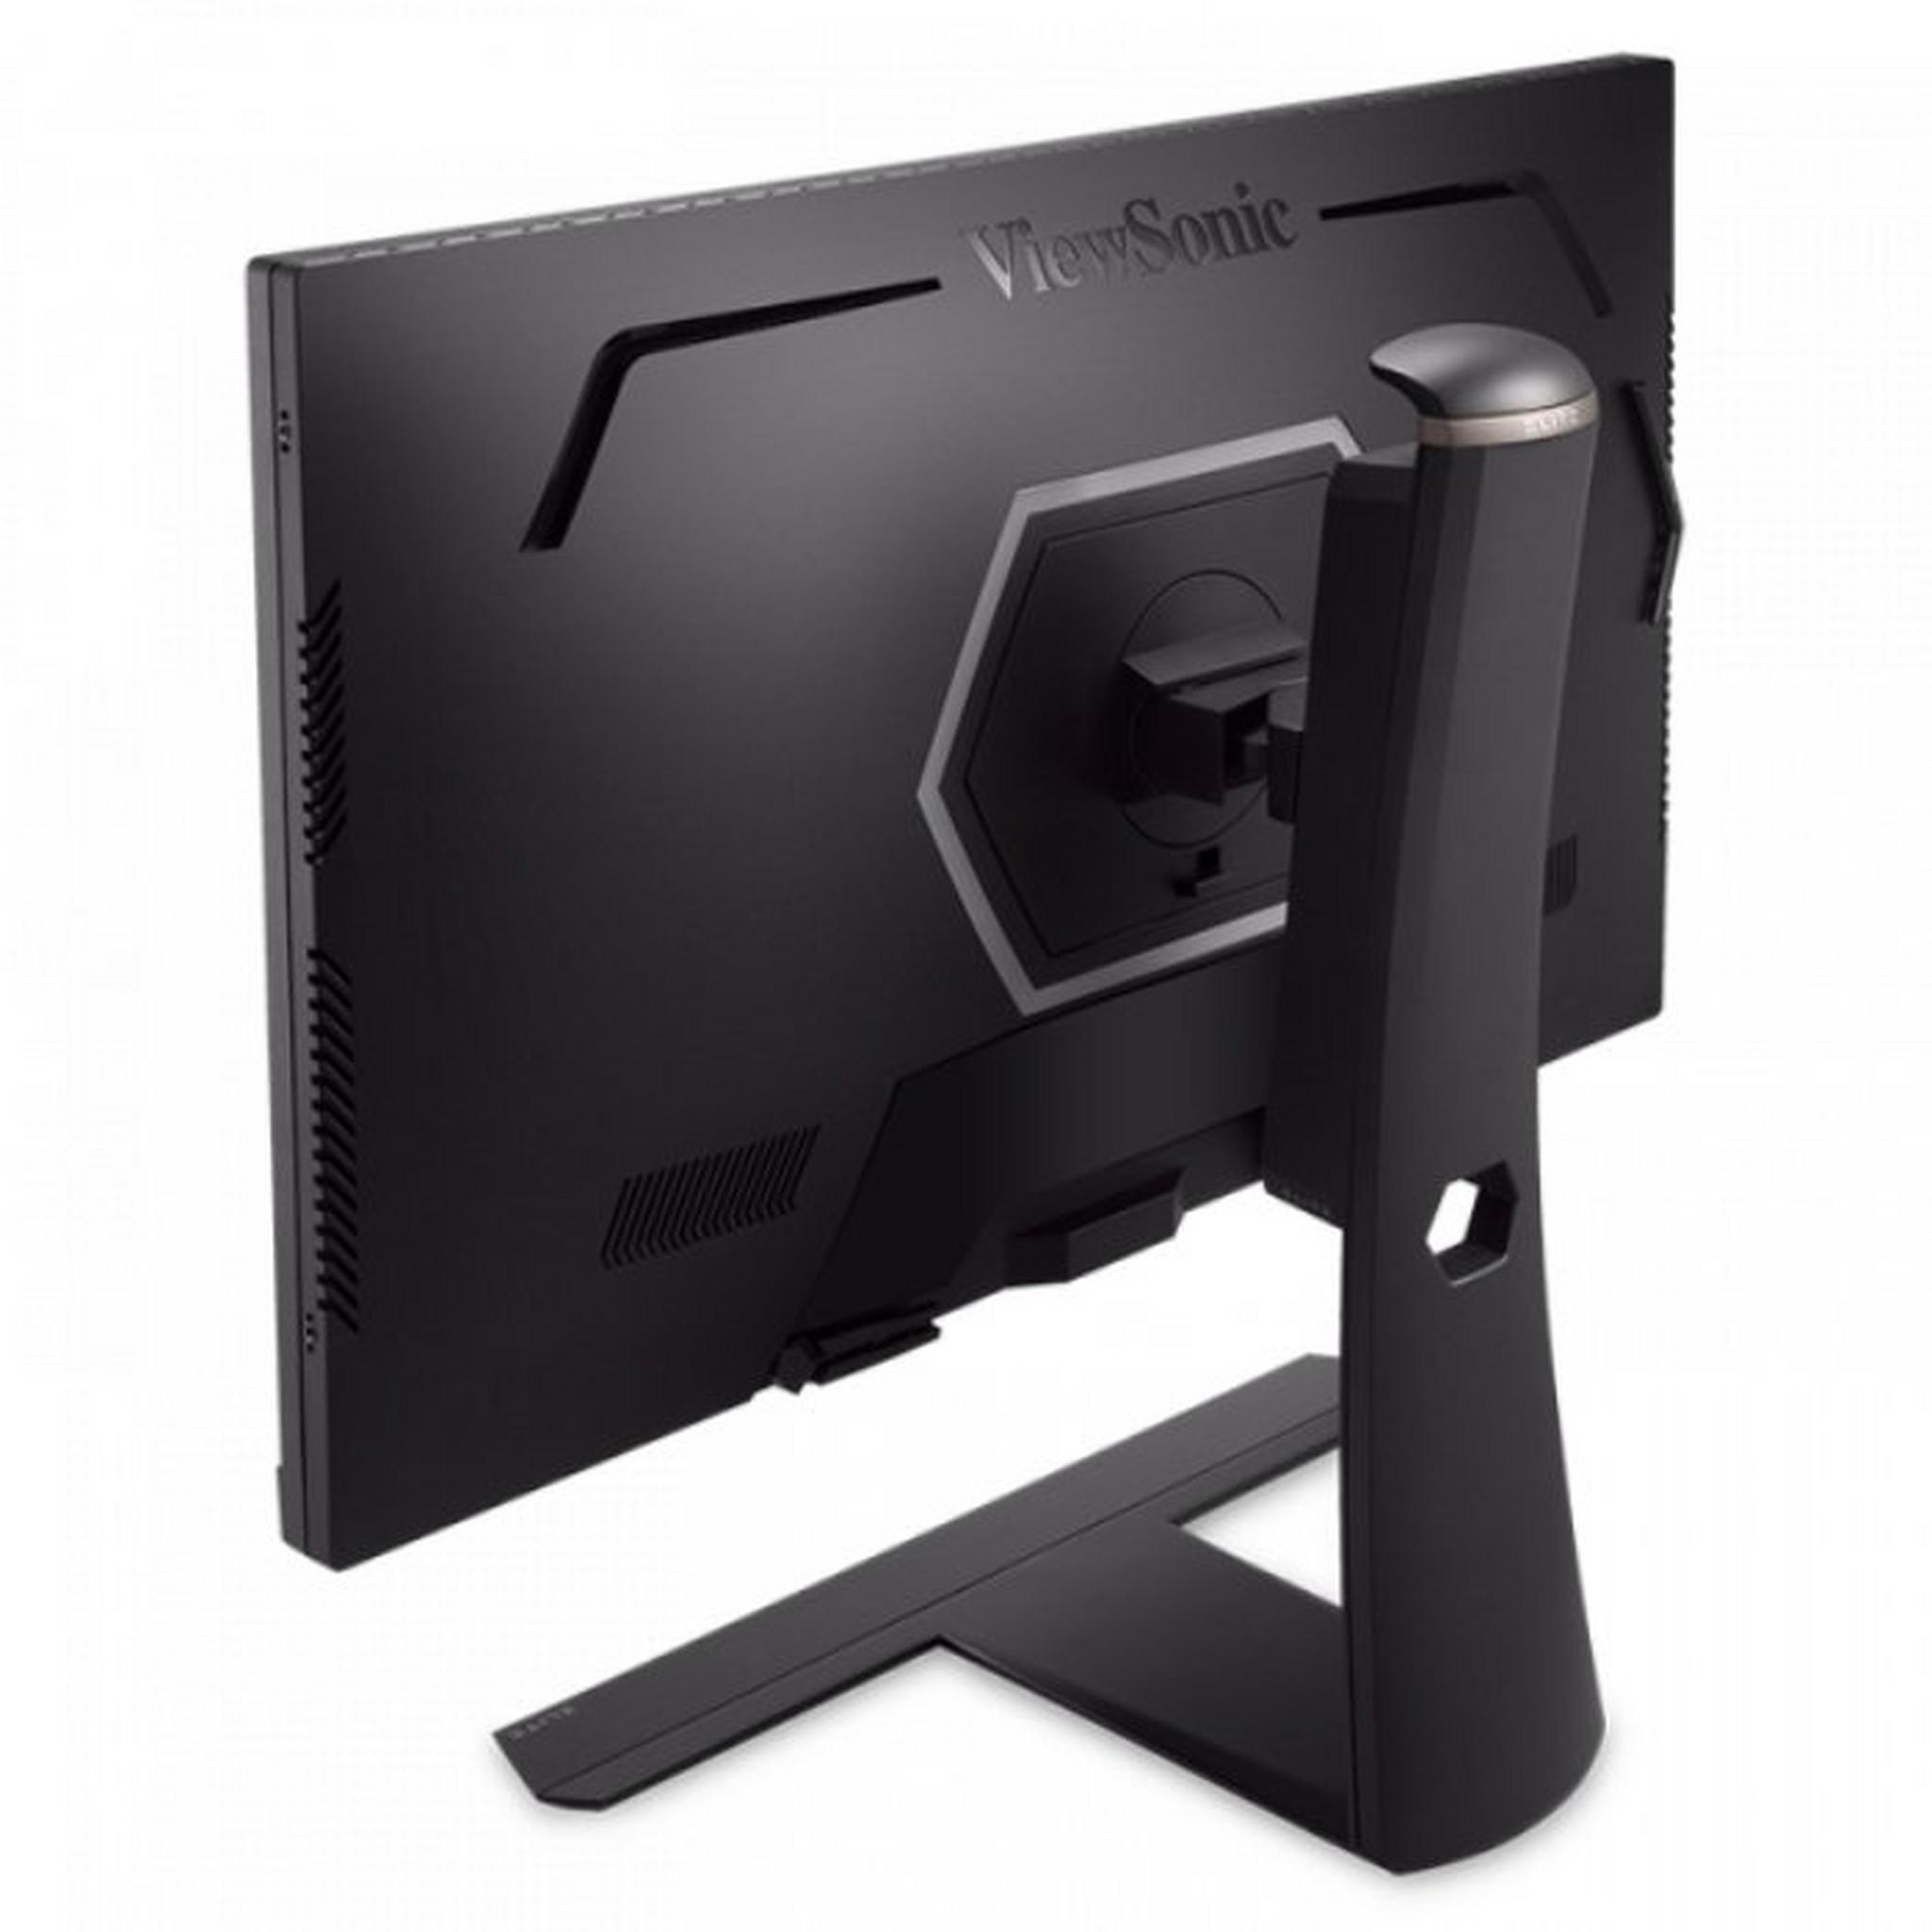 ViewSonic Elite XG270 Full HD 240Hz 27" Gaming Monitor (VX2481-MH)